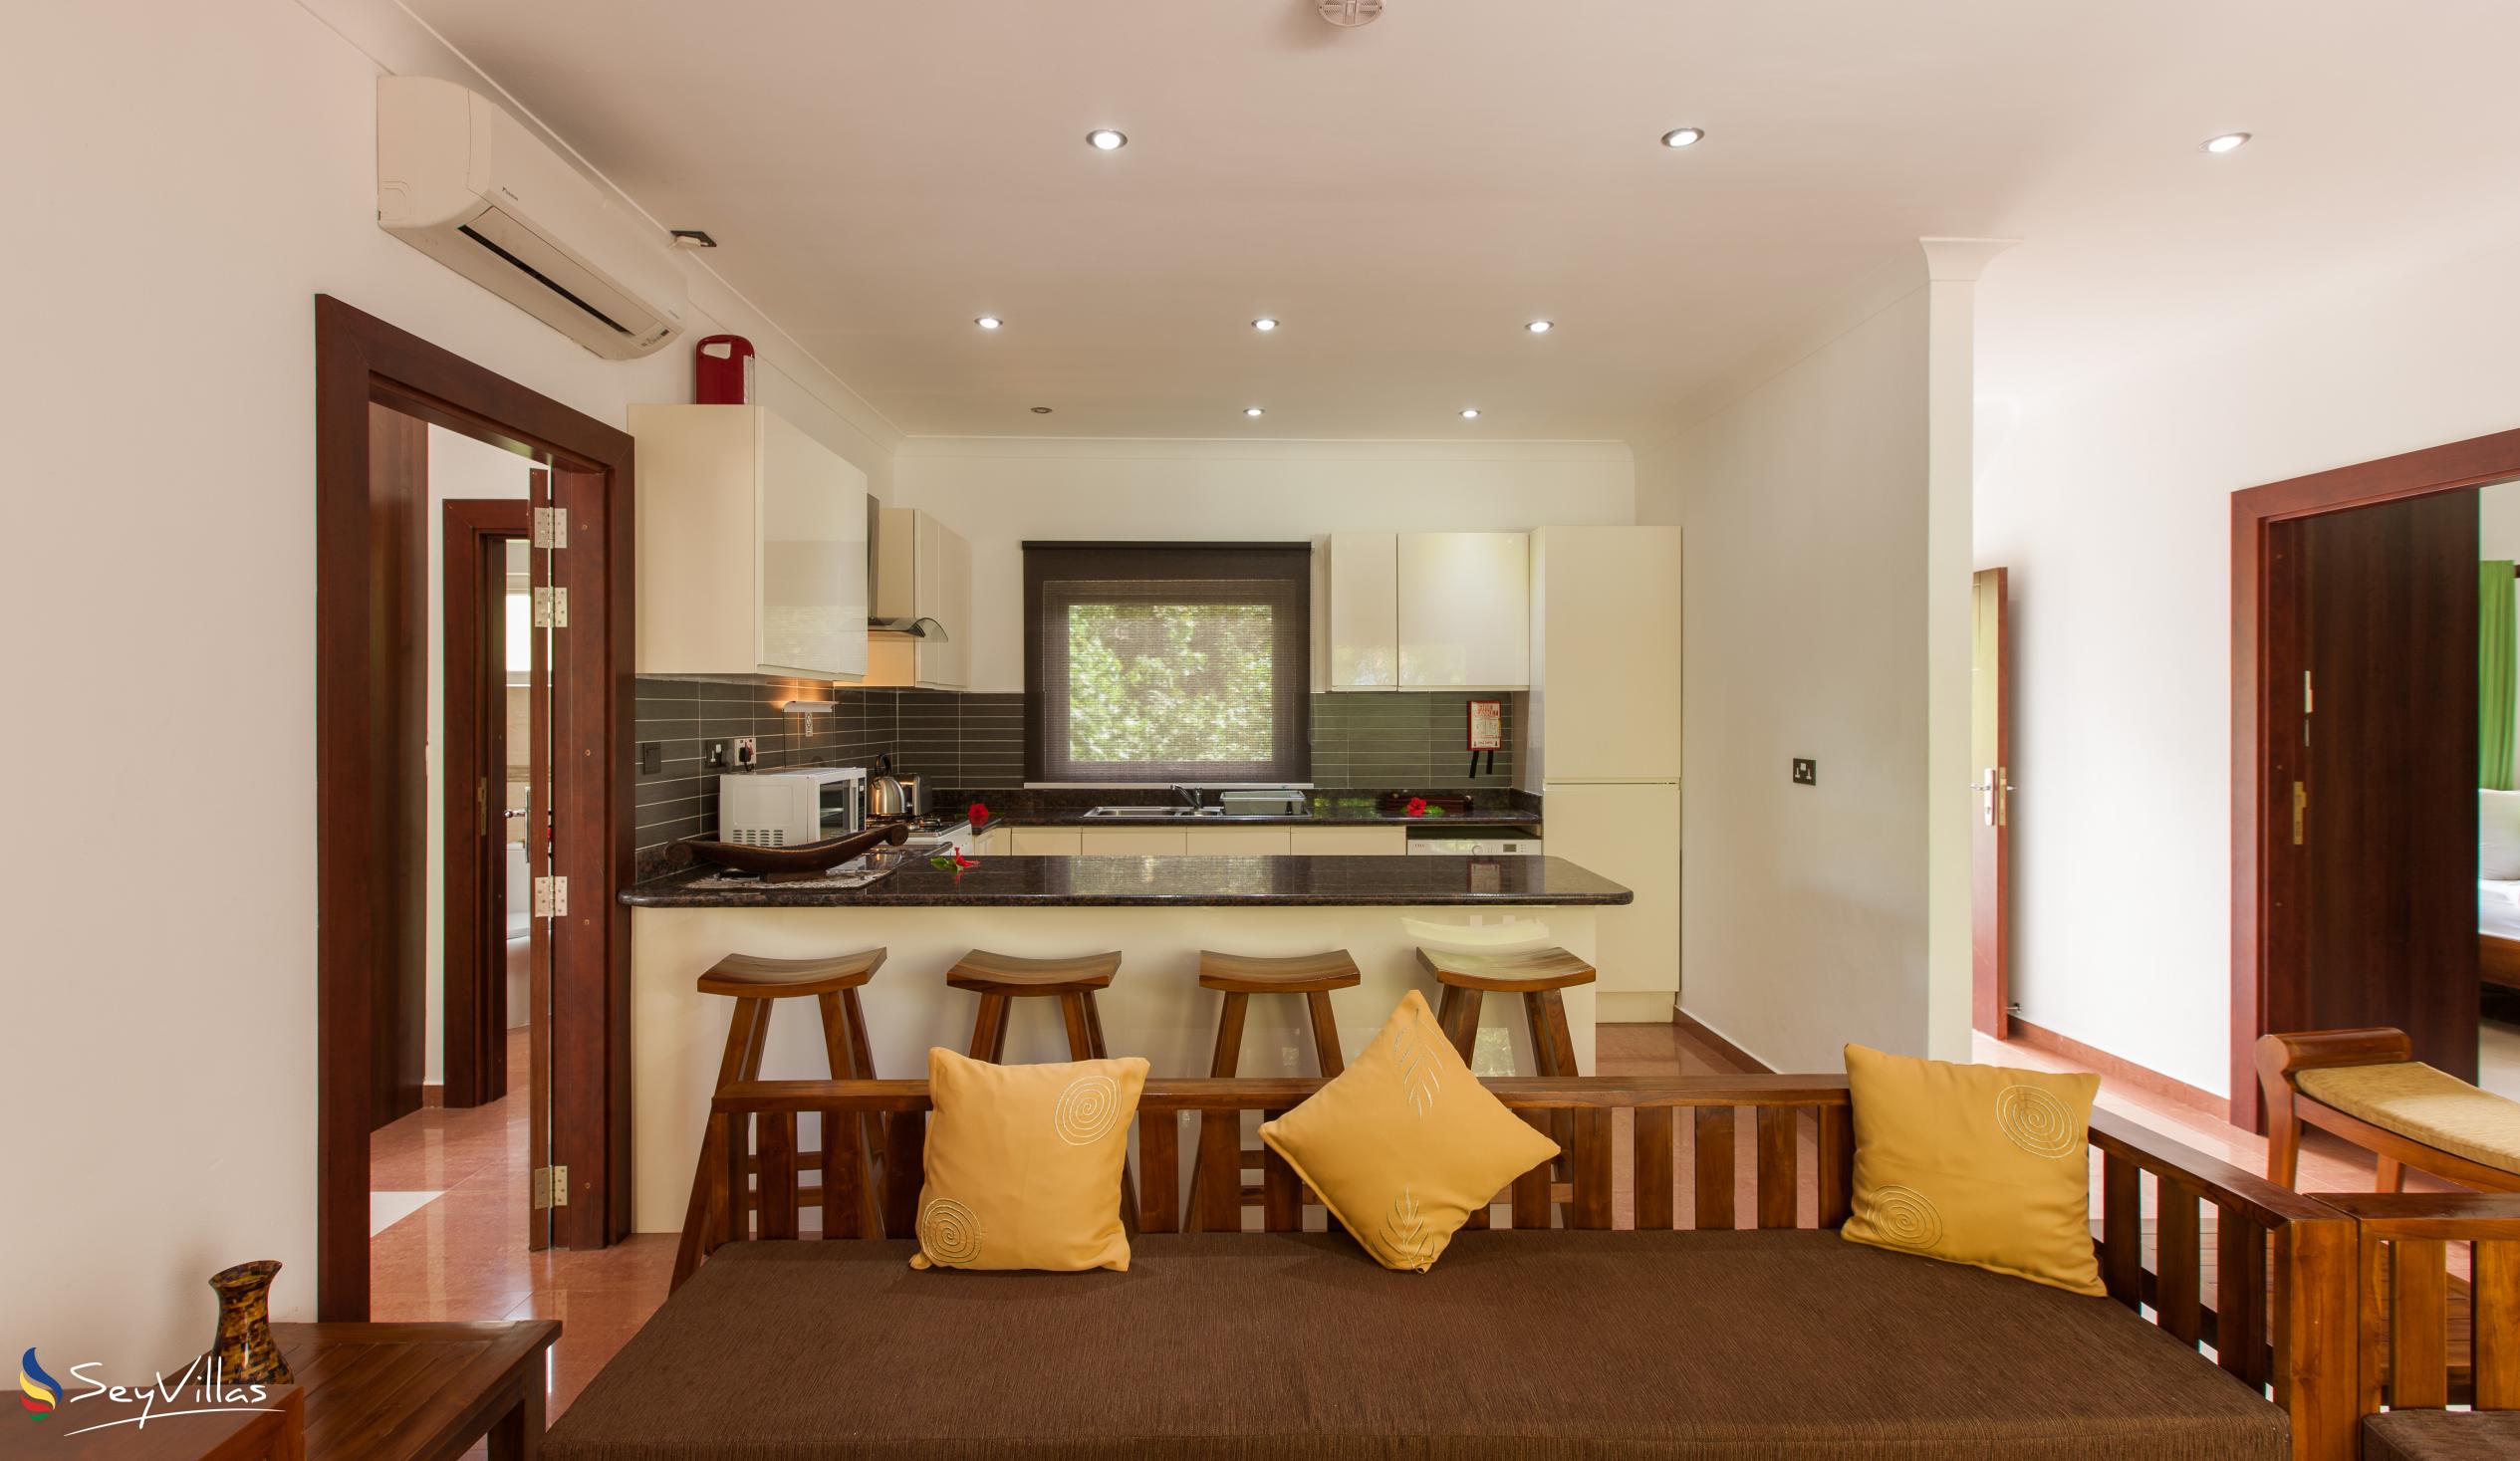 Foto 69: YASAD Luxury Beach Residence - Appartamento con 3 camere da letto - Praslin (Seychelles)